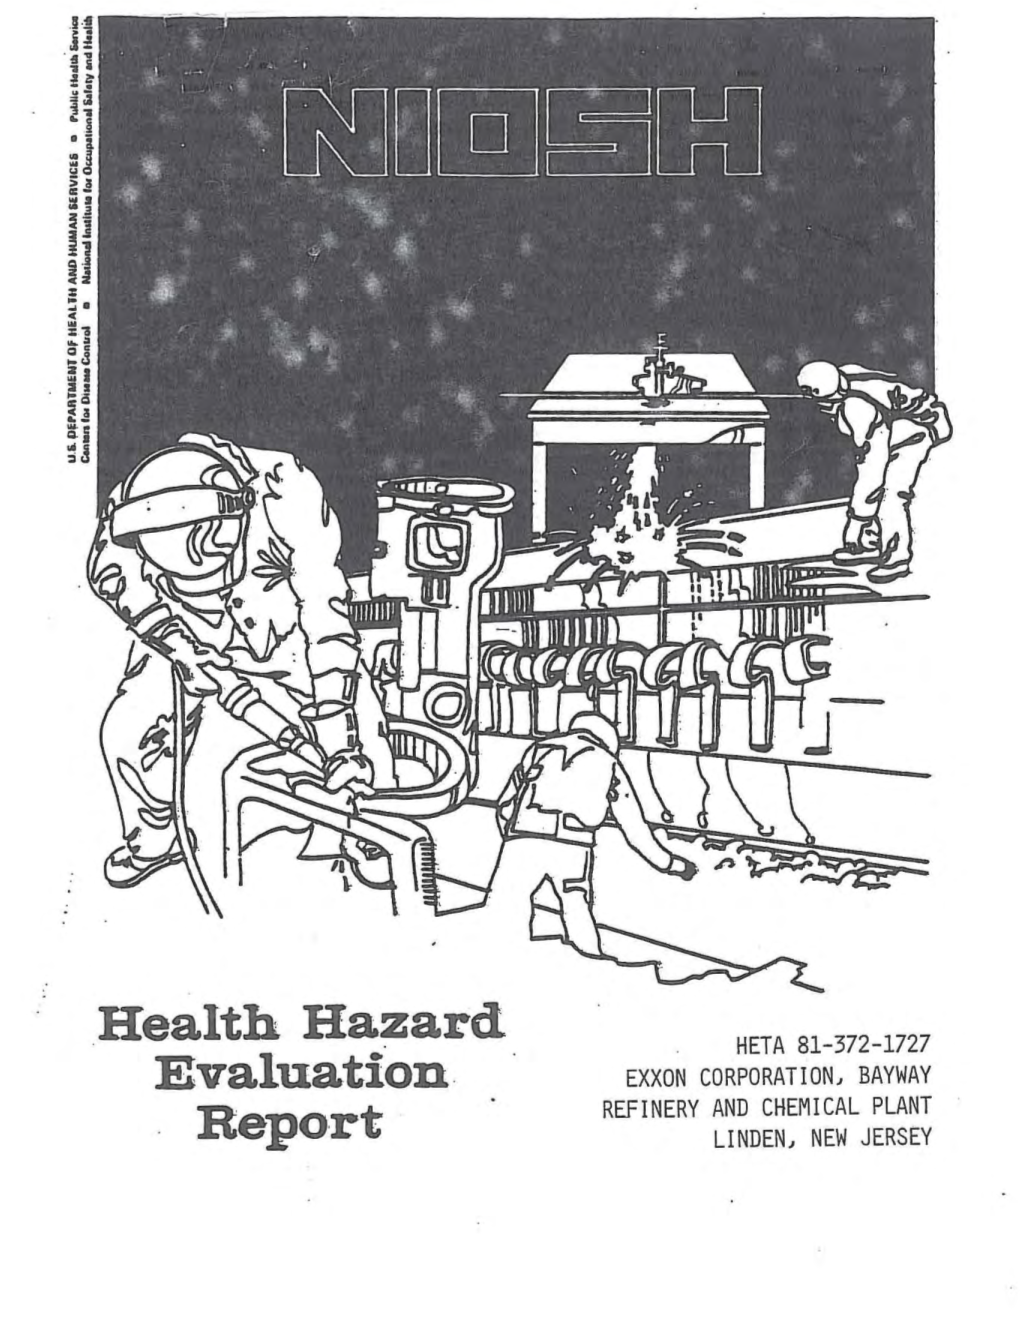 Health Hazard Evaluation Report 81-372-1727